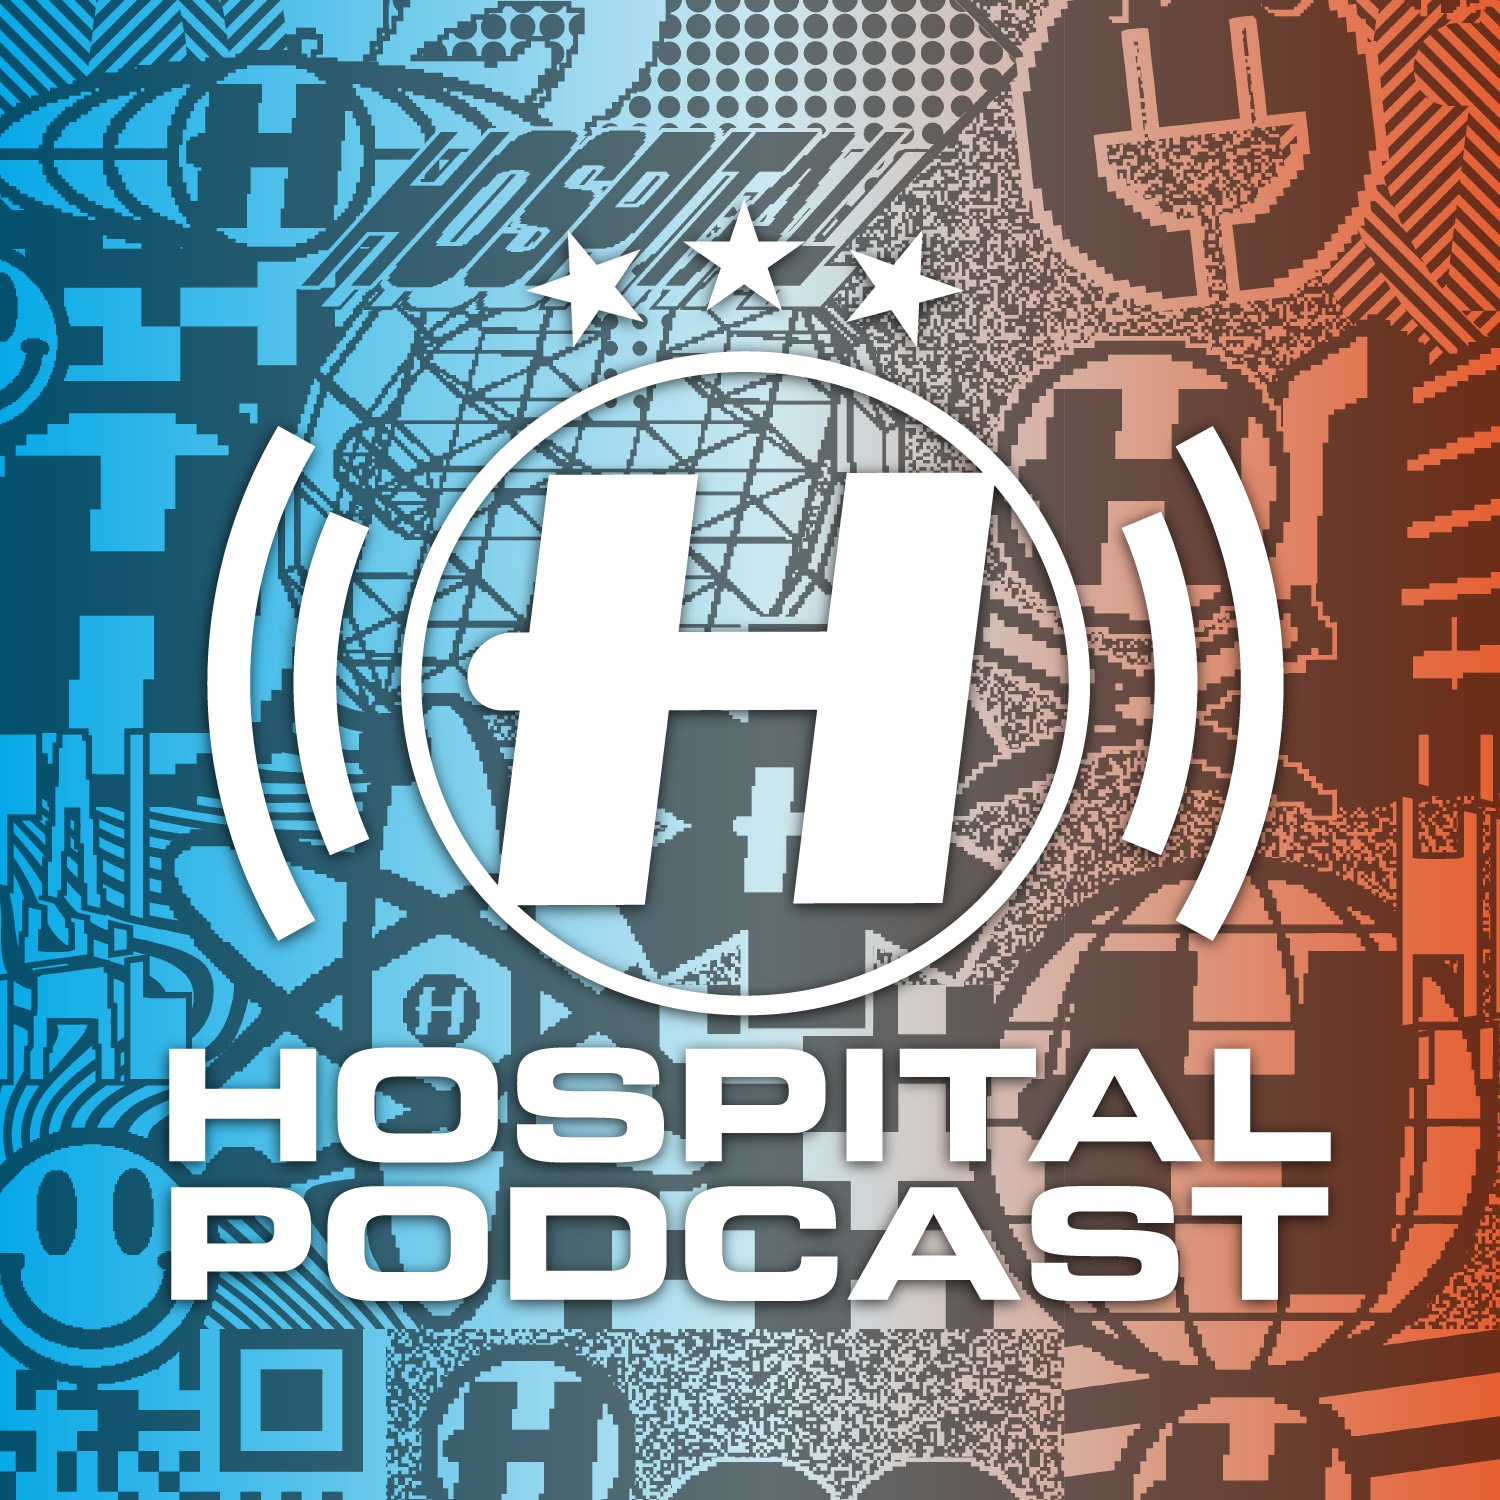  Hospital Podcast 421 with London Elektricity Artwork